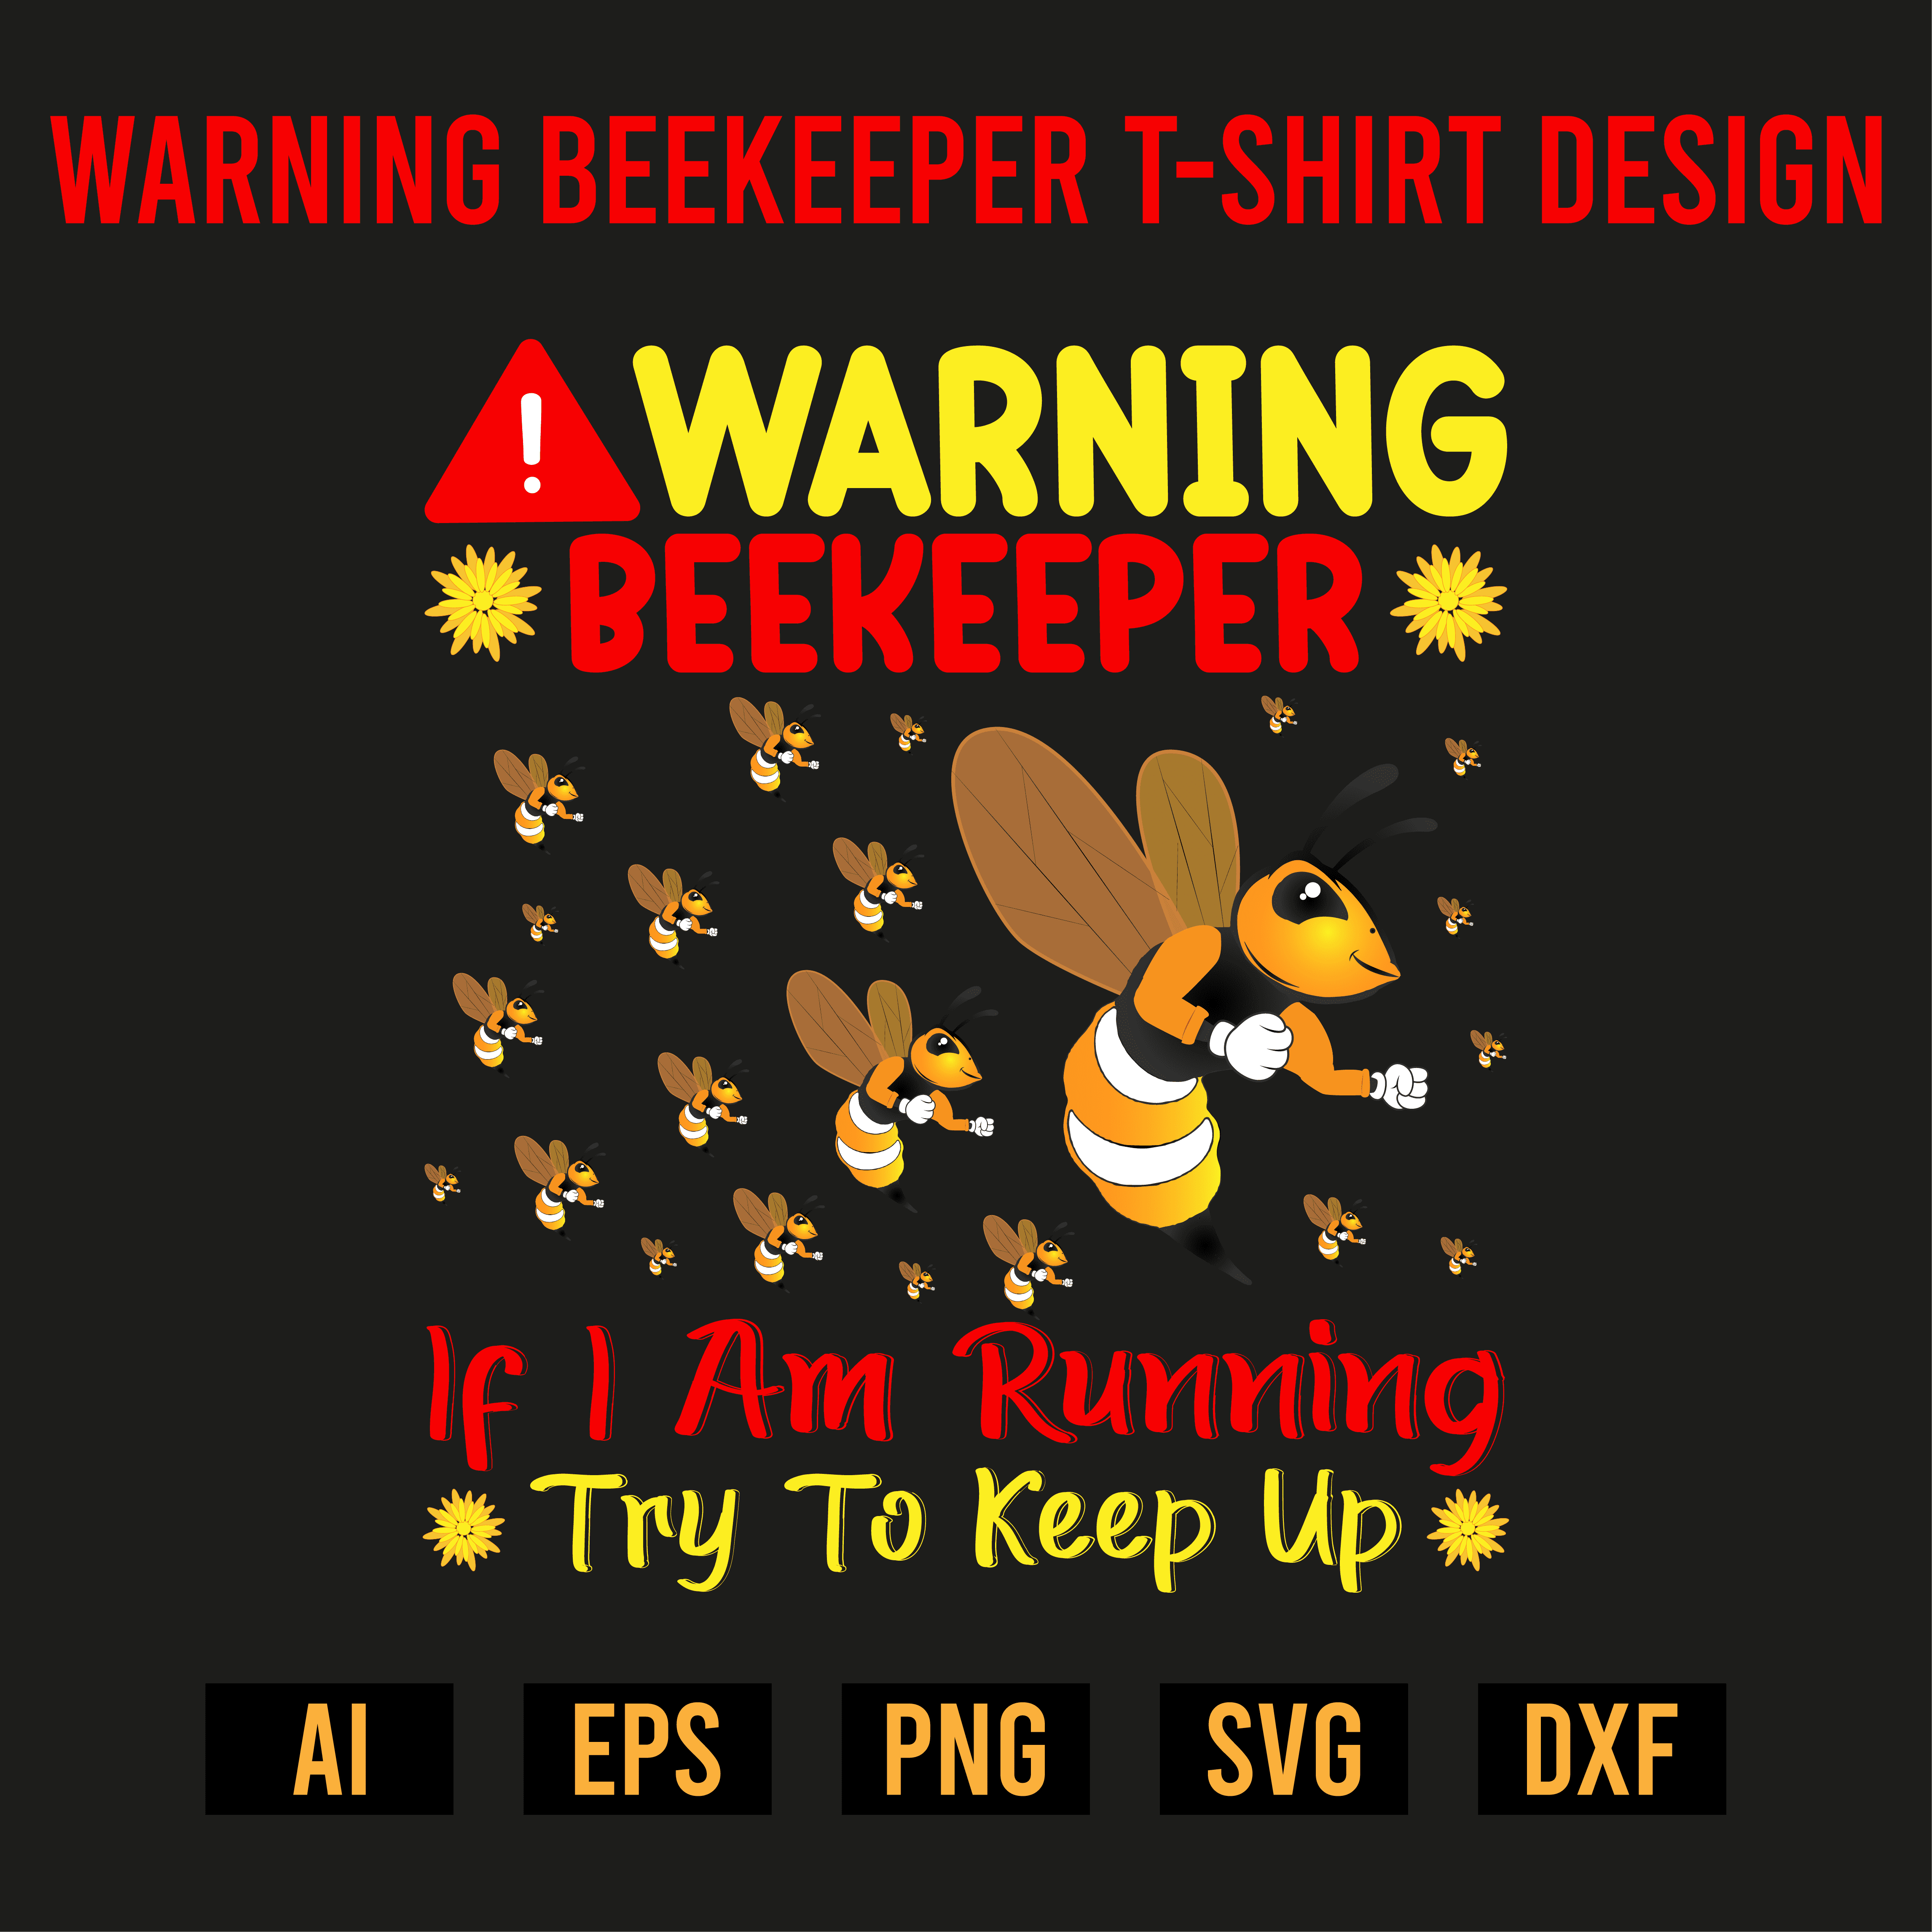 Warning Beekeeper T- Shirt Design cover image.